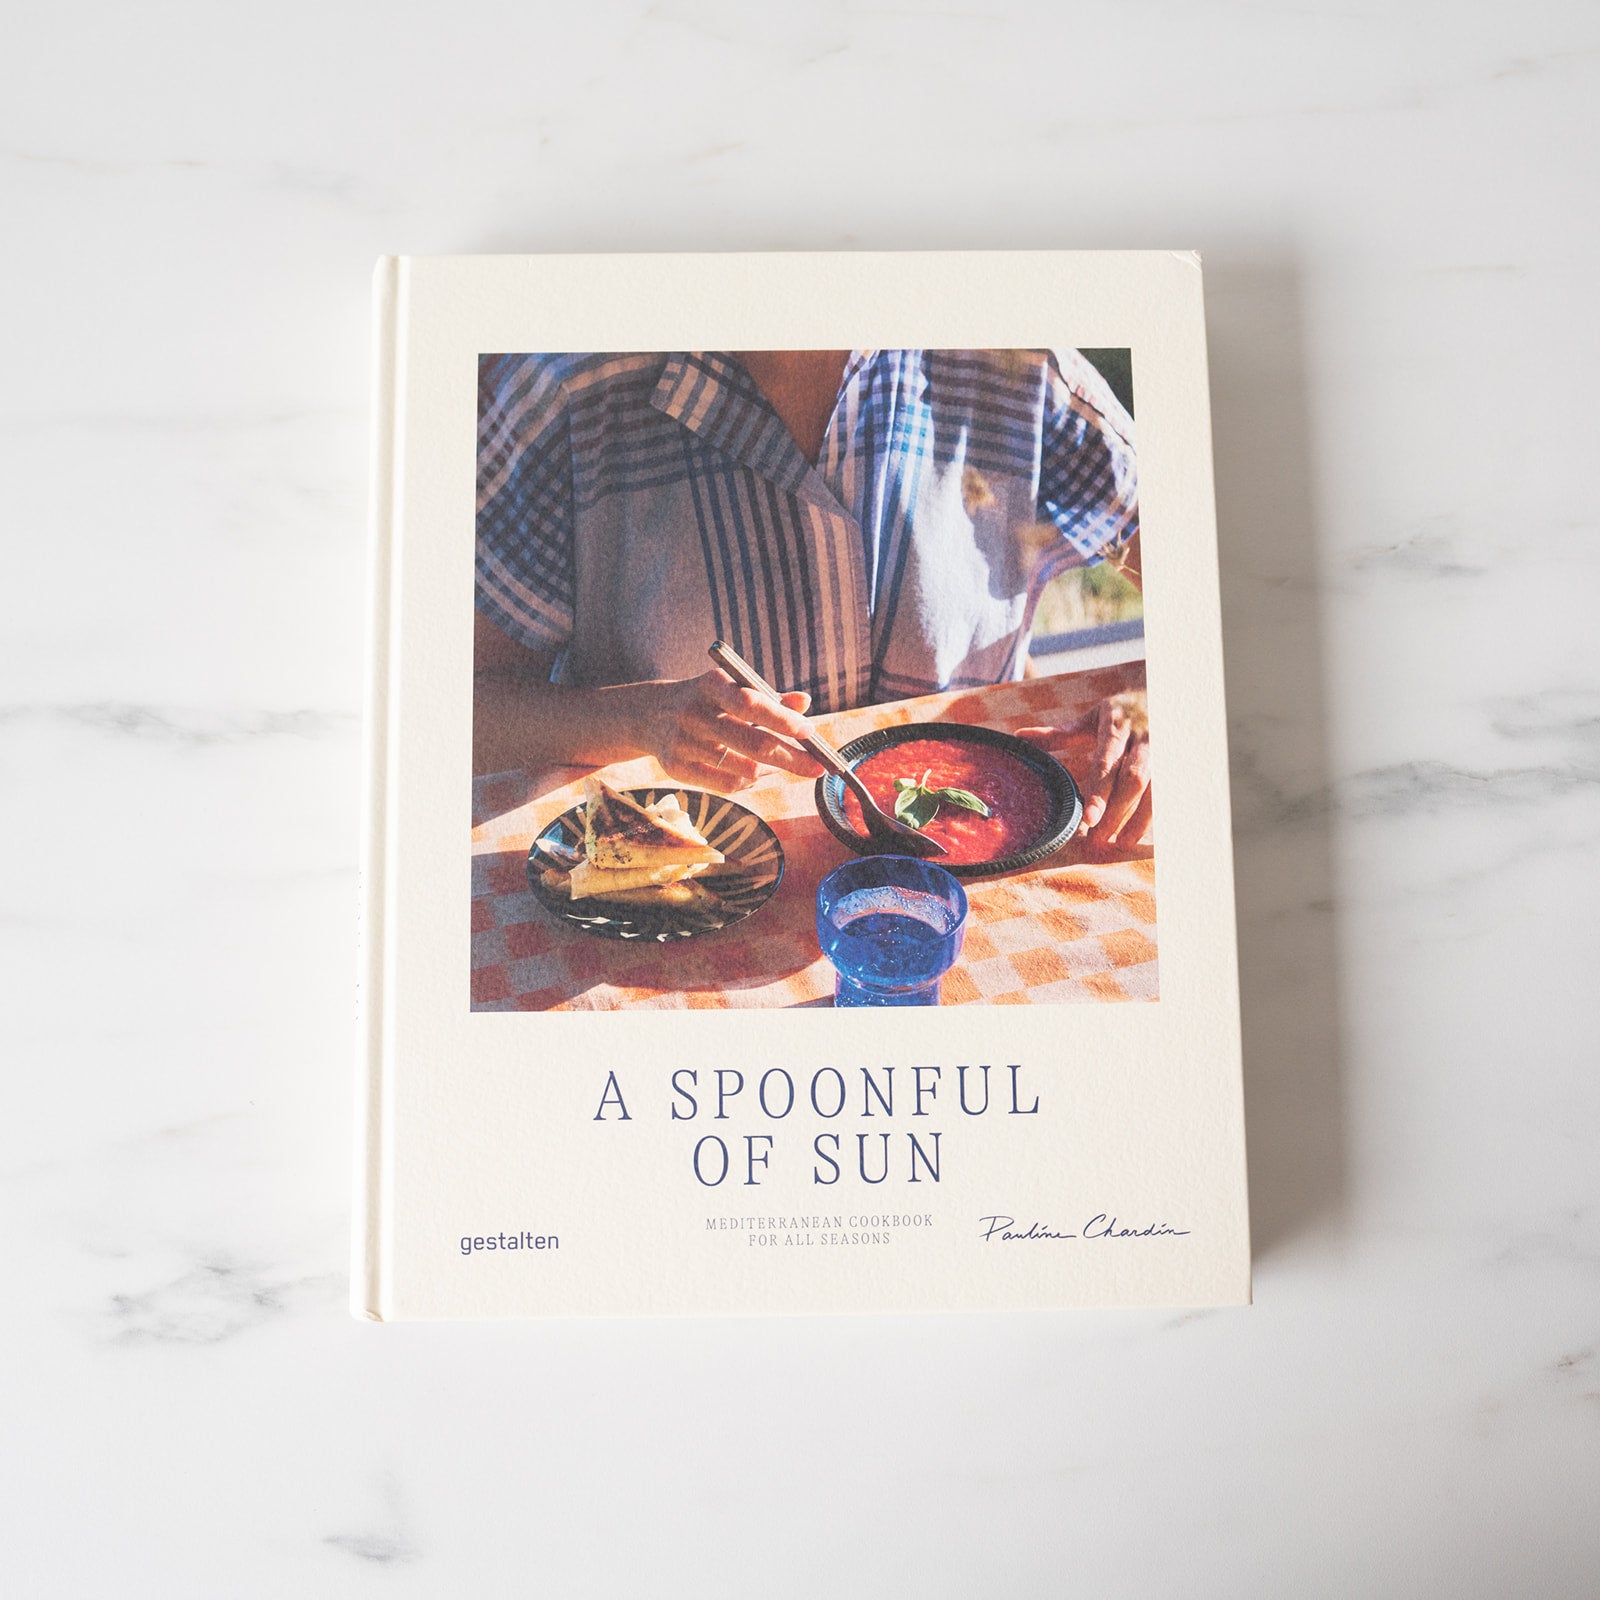 A Spoonful of Sun - Mediterranean Cookbook For All Seasons" by Gestalten - Rug & Weave